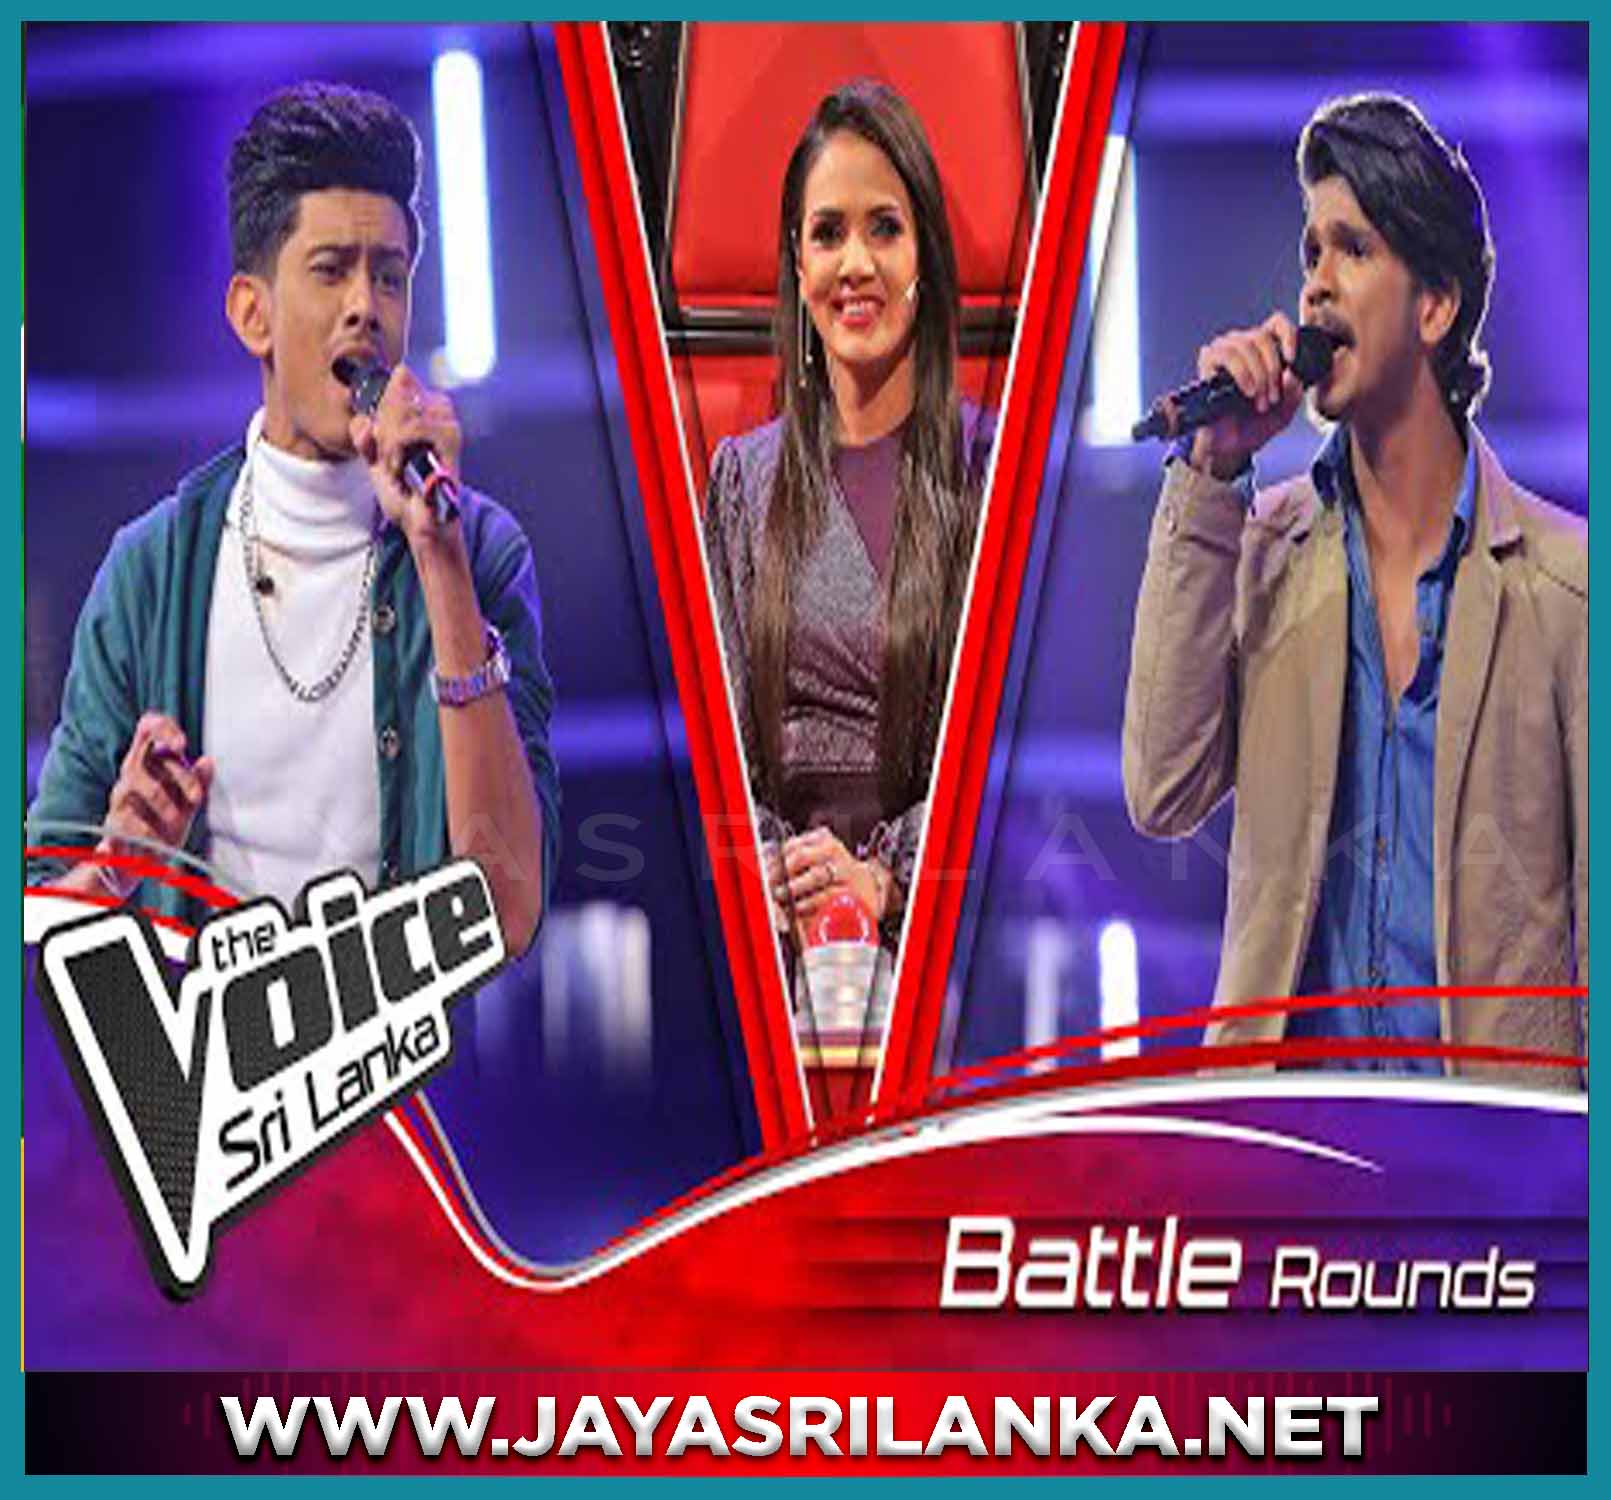 Wikasitha Watha Kamale (Battle Rounds The Voice Sri Lanka)